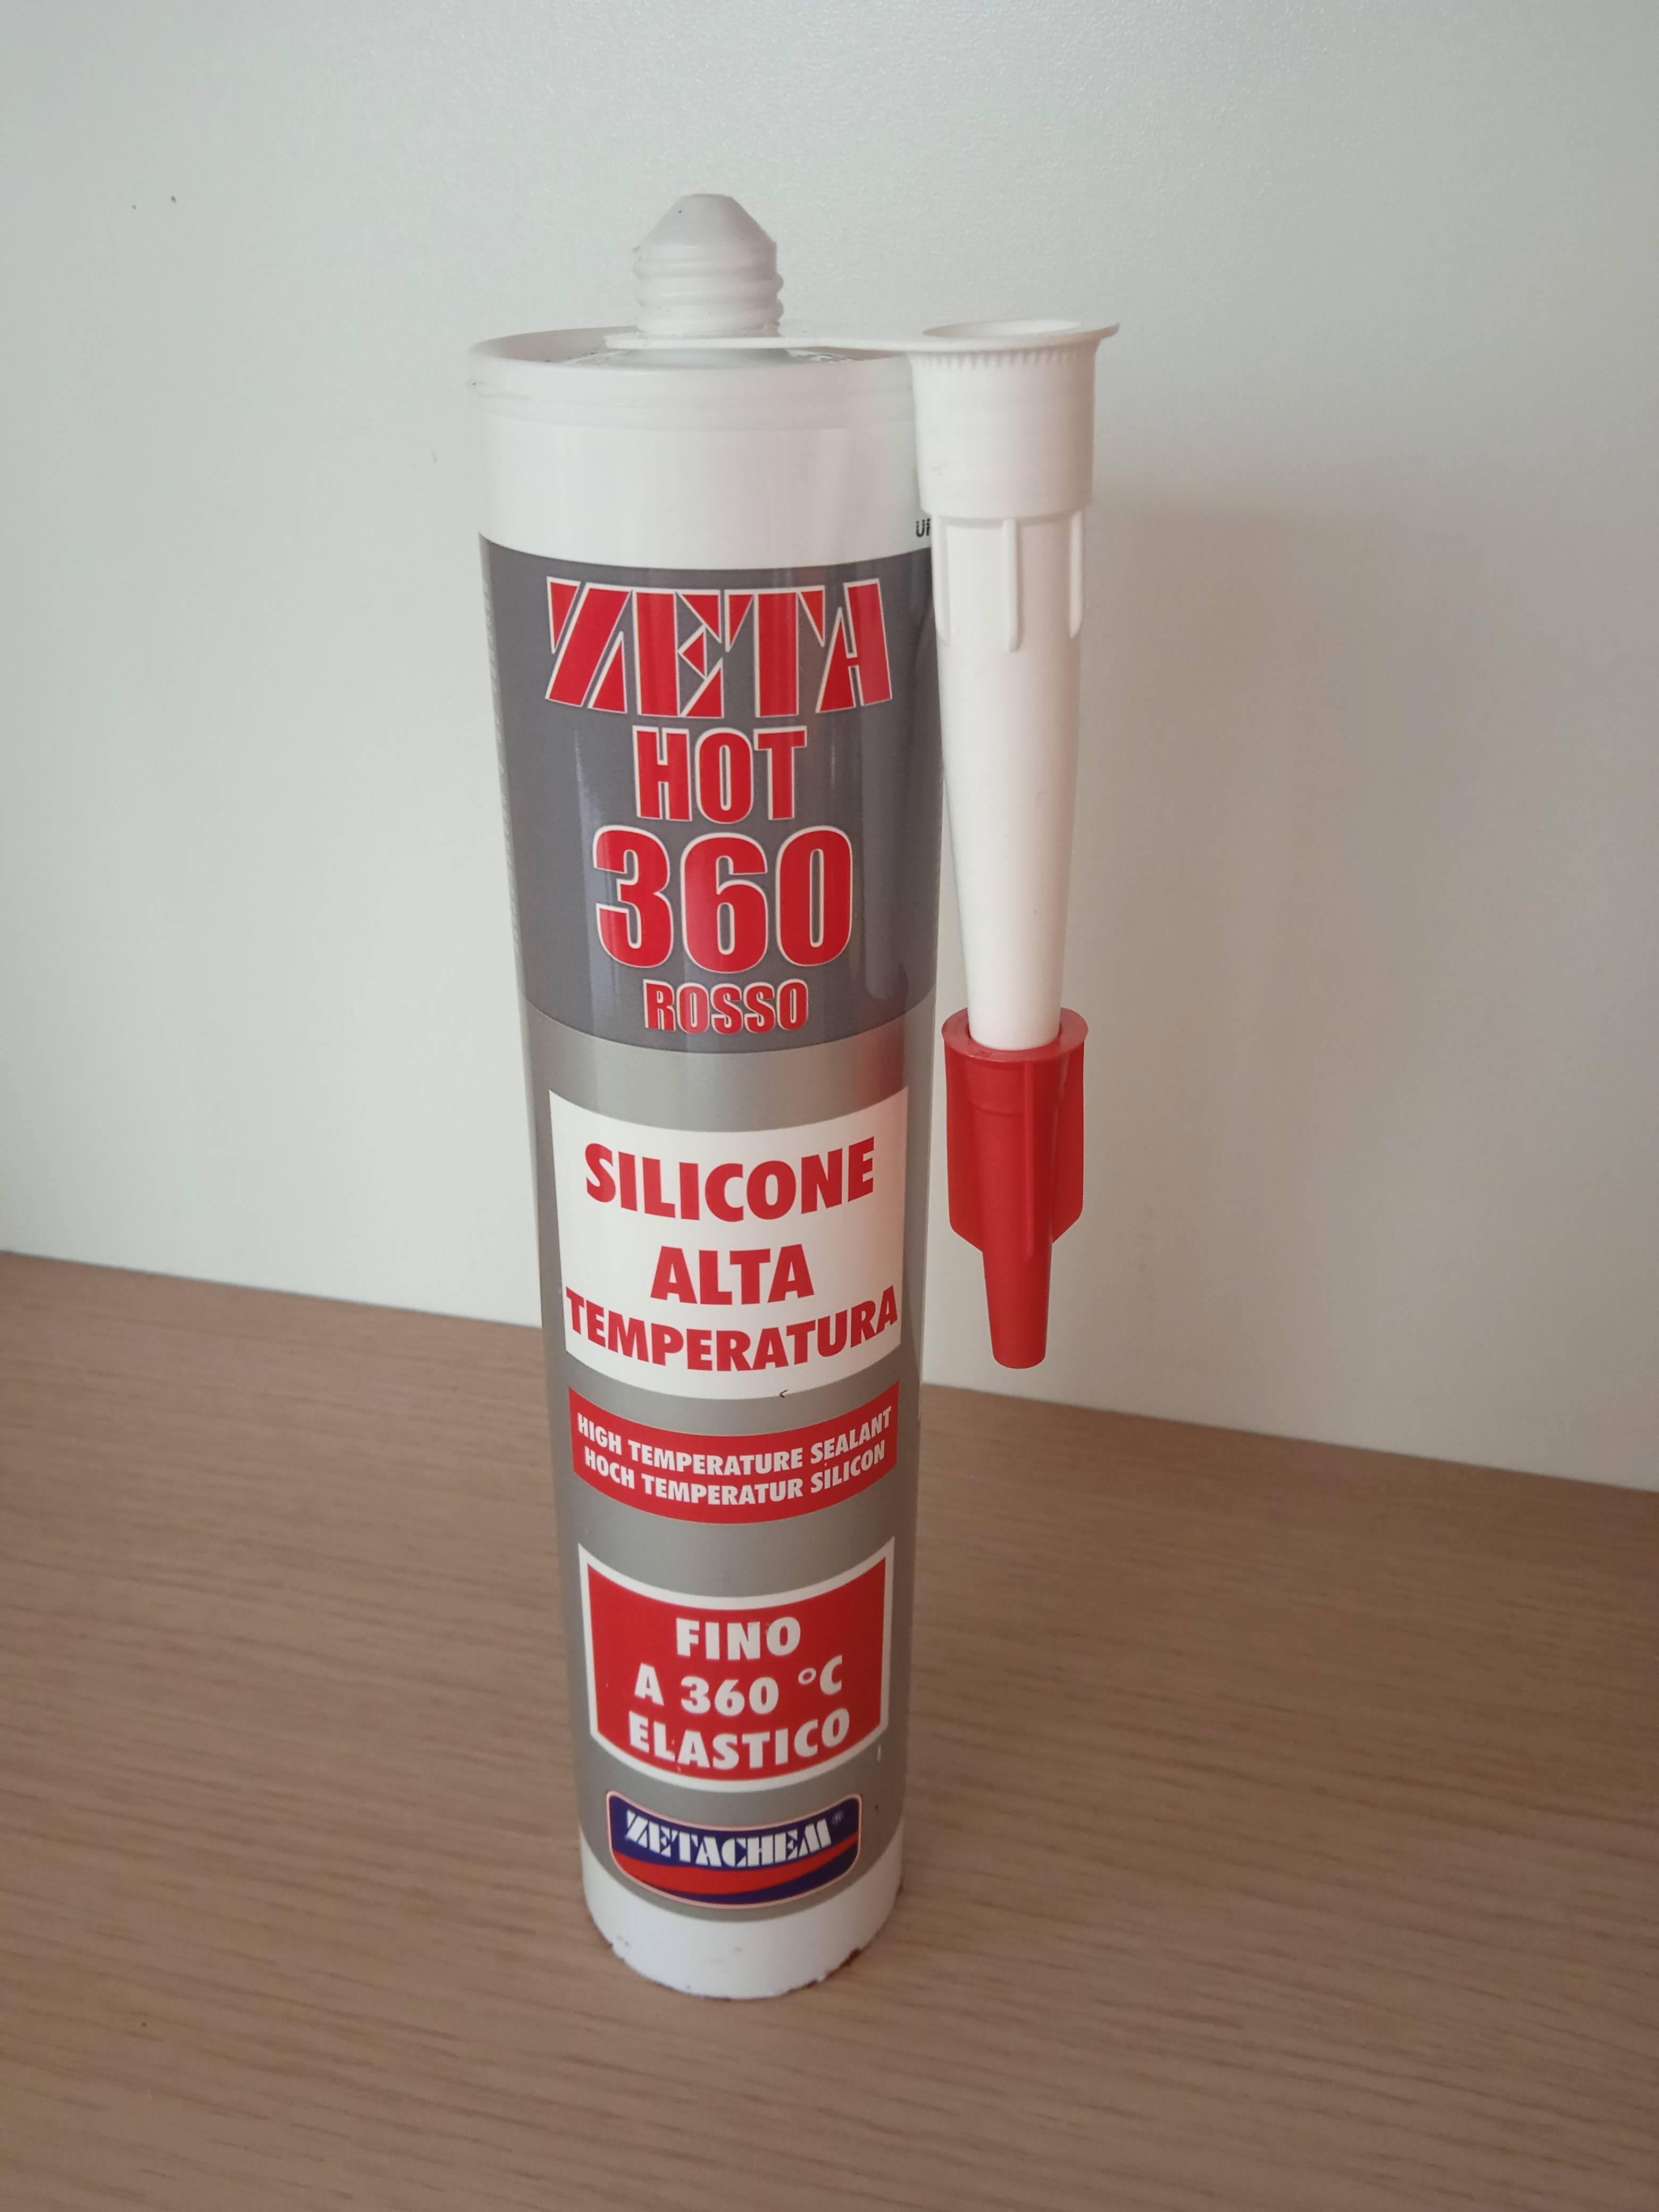 Silicone acetico alta temperatura – Zeta Hot 360